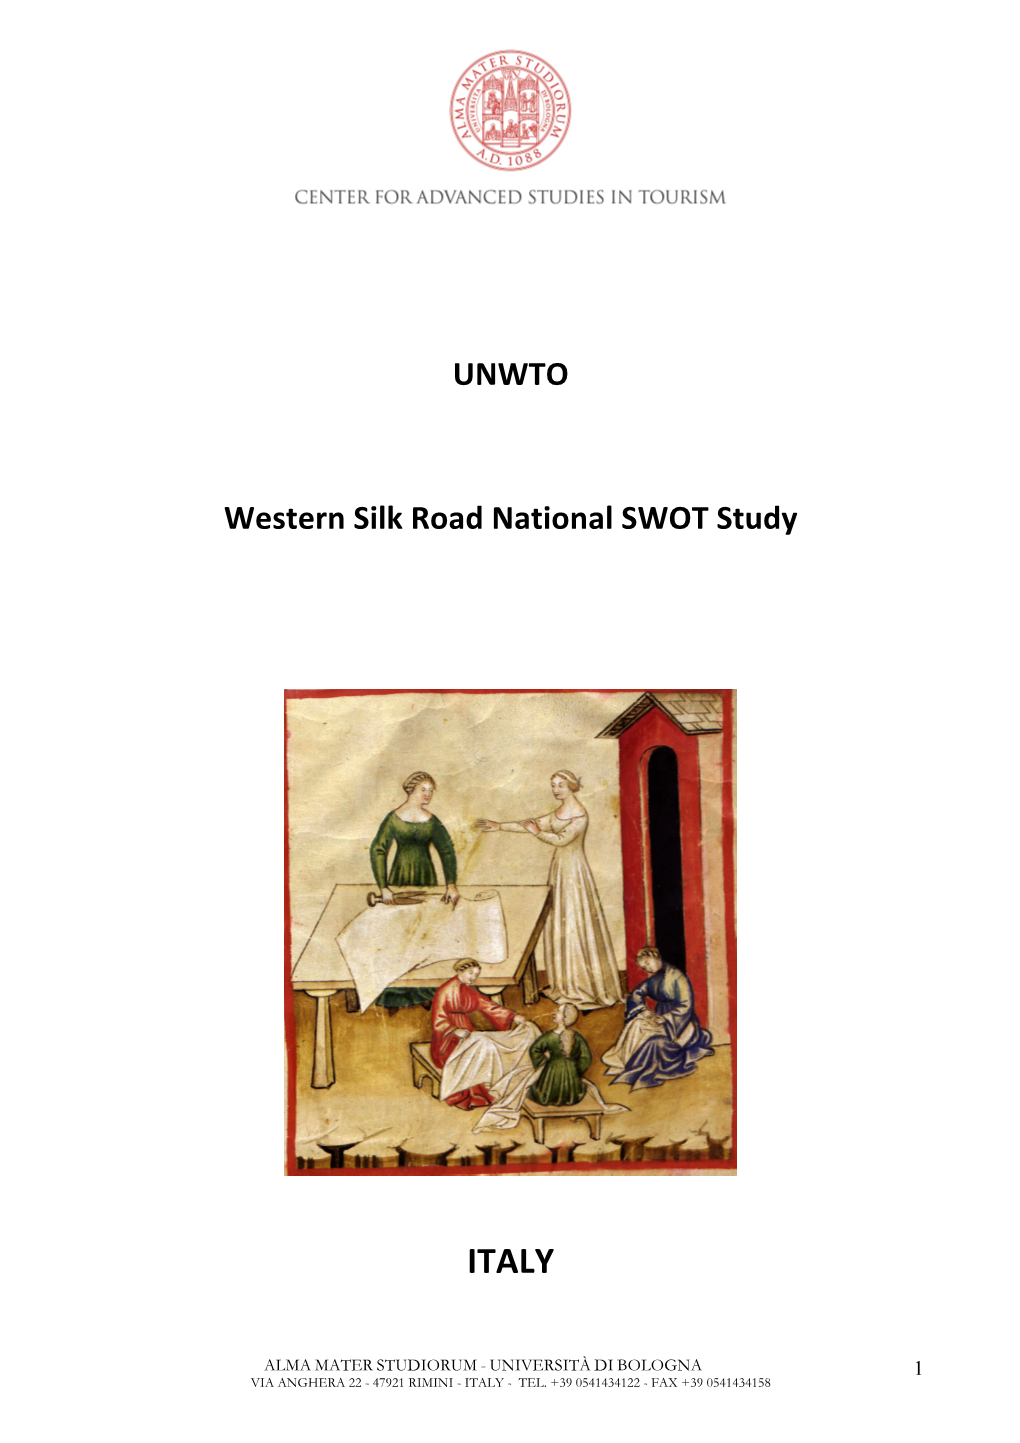 Western Silk Road in Italy SWOT